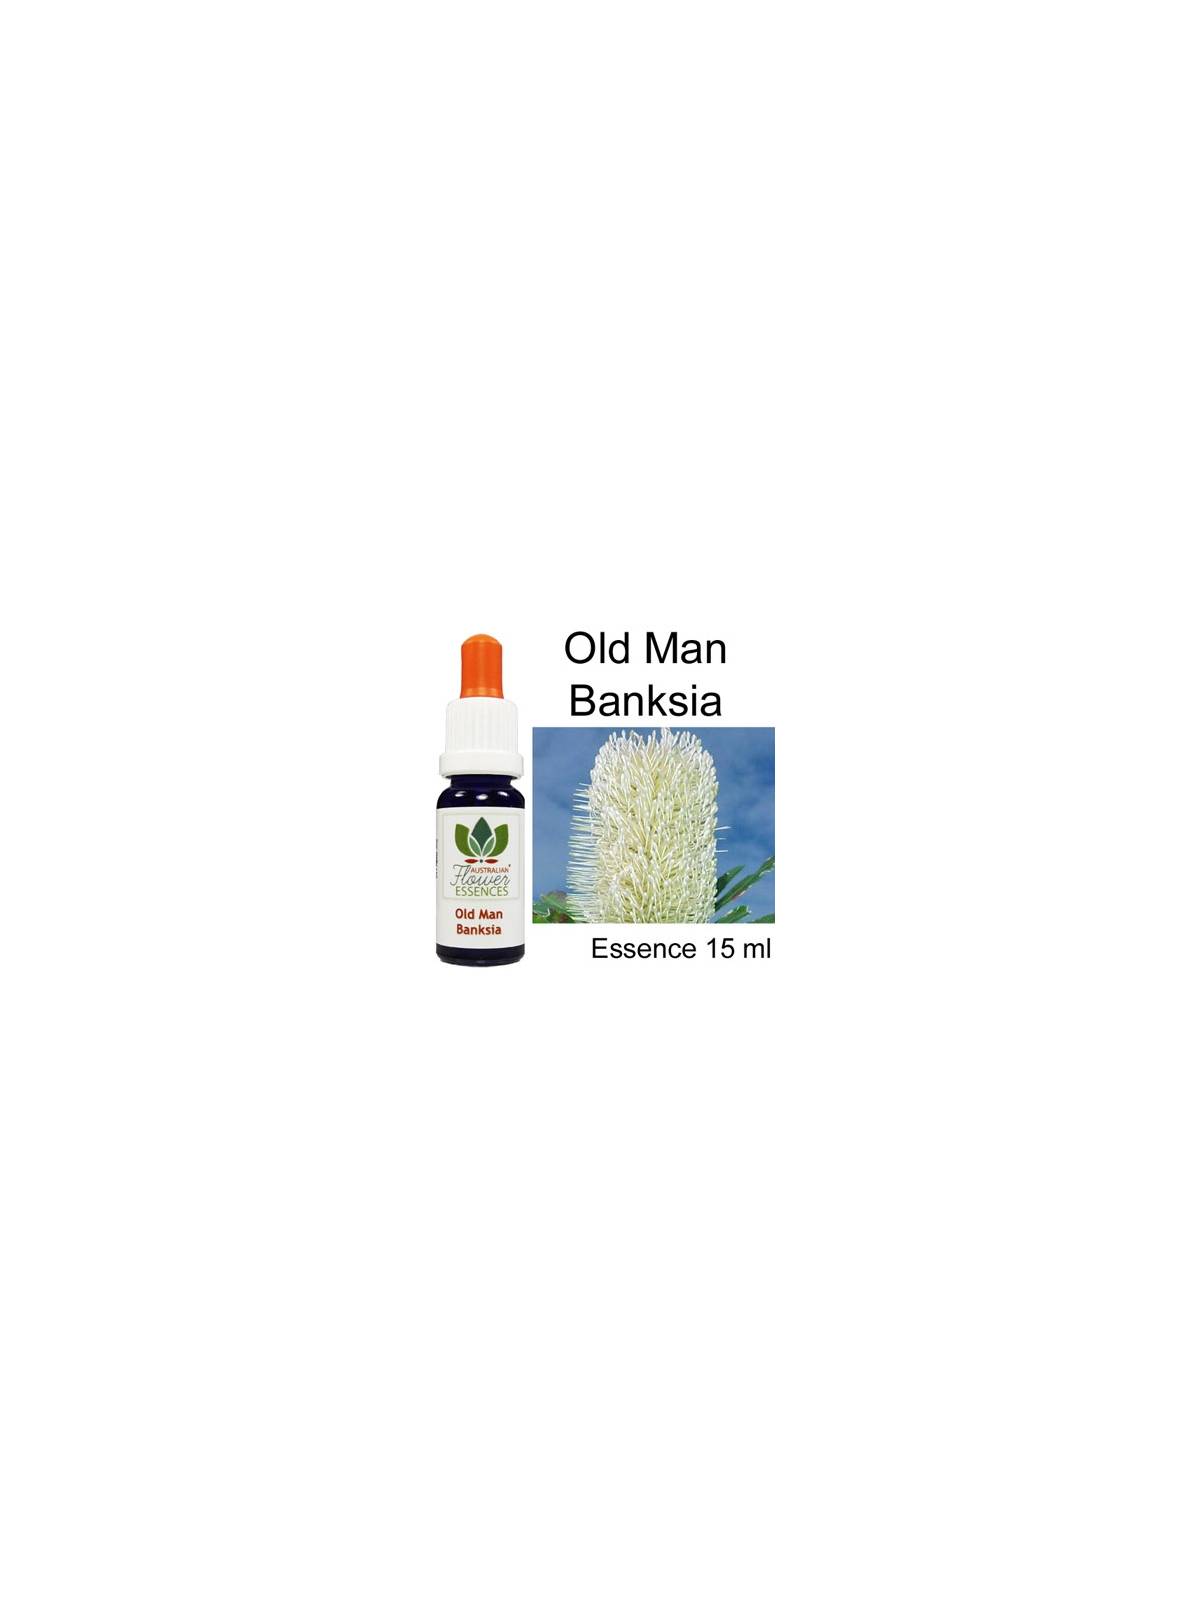 OLD MAN BANKSIA Australian Flower Essences 15 ml